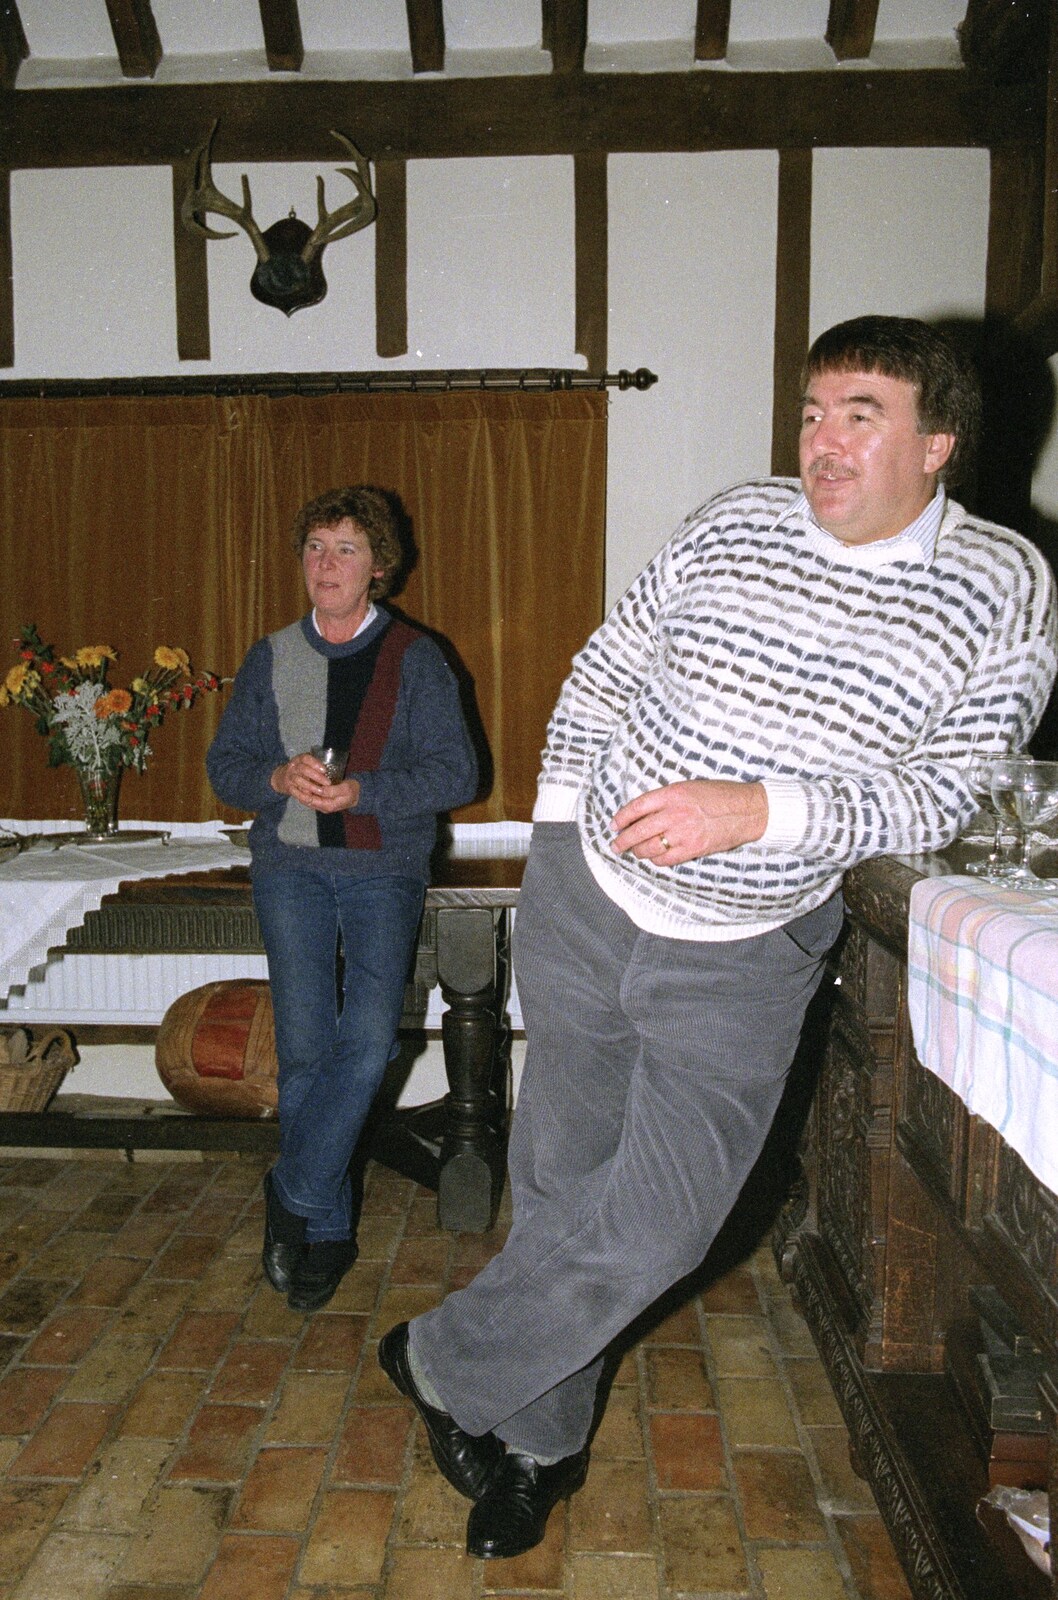 Brenda and Corky from Bonfire Night, Stuston, Suffolk - 5th November 1990